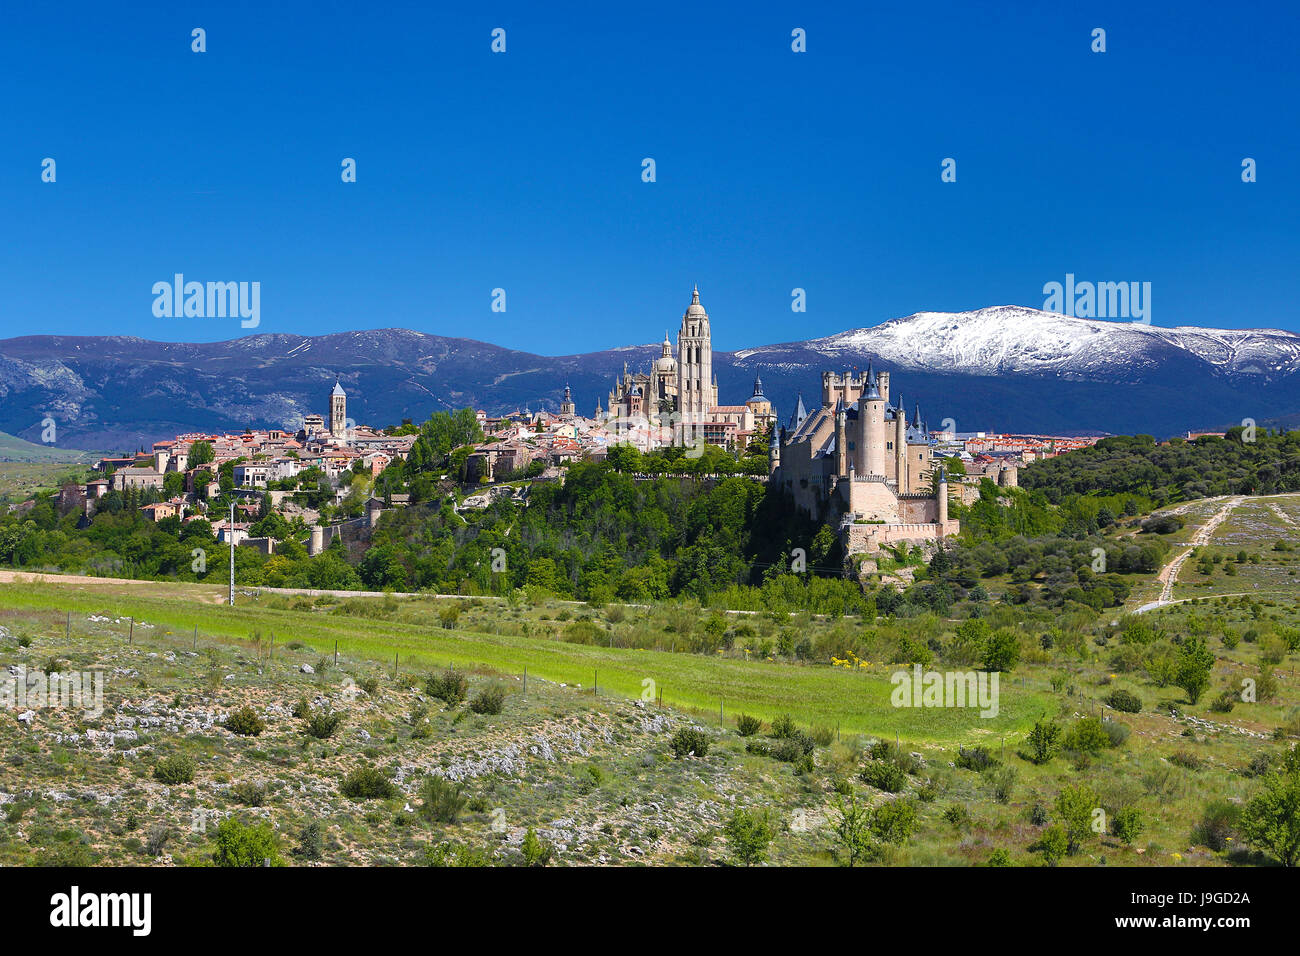 Spain, Castilla Leon Community, Segovia City Skyline, Alcazar Castle, Cathedral and Guadarrama Mountain Range, Stock Photo